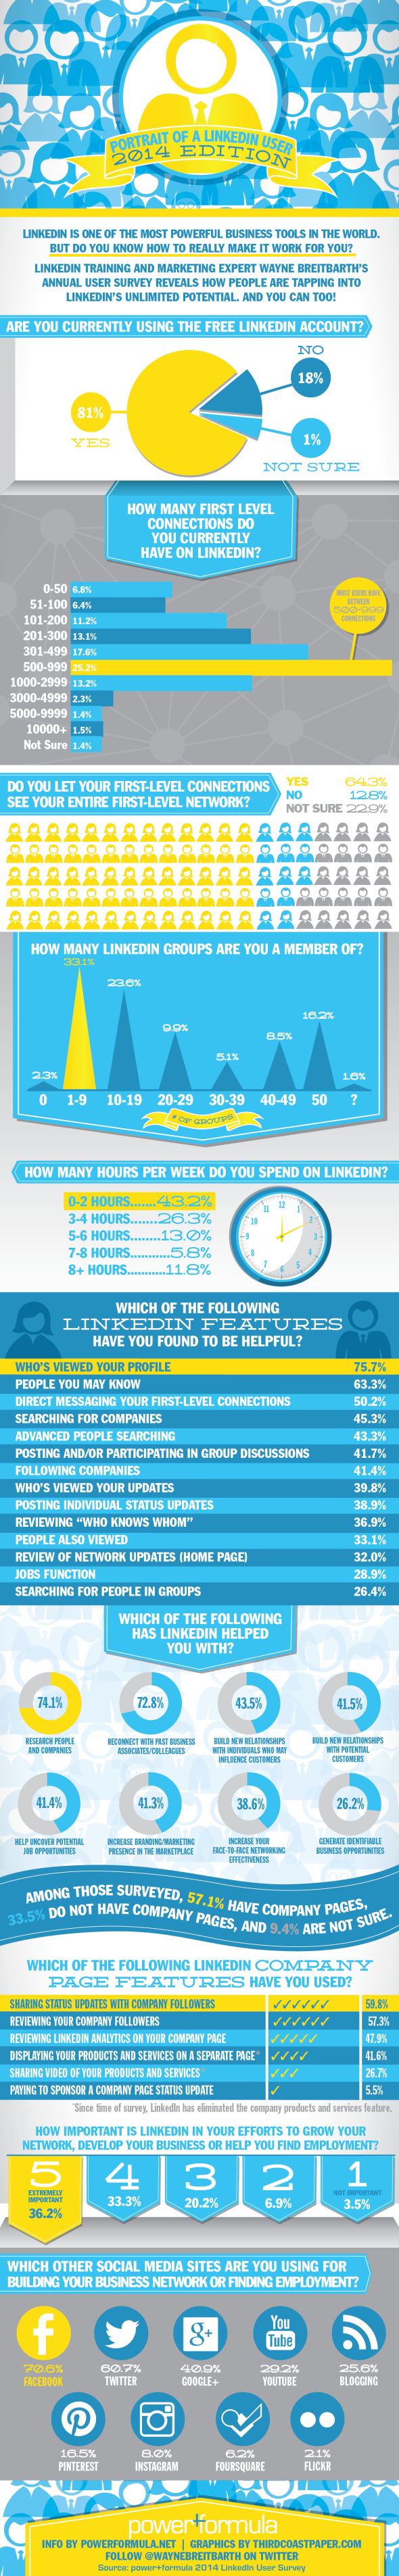 2014-LinkedIn-Infographic